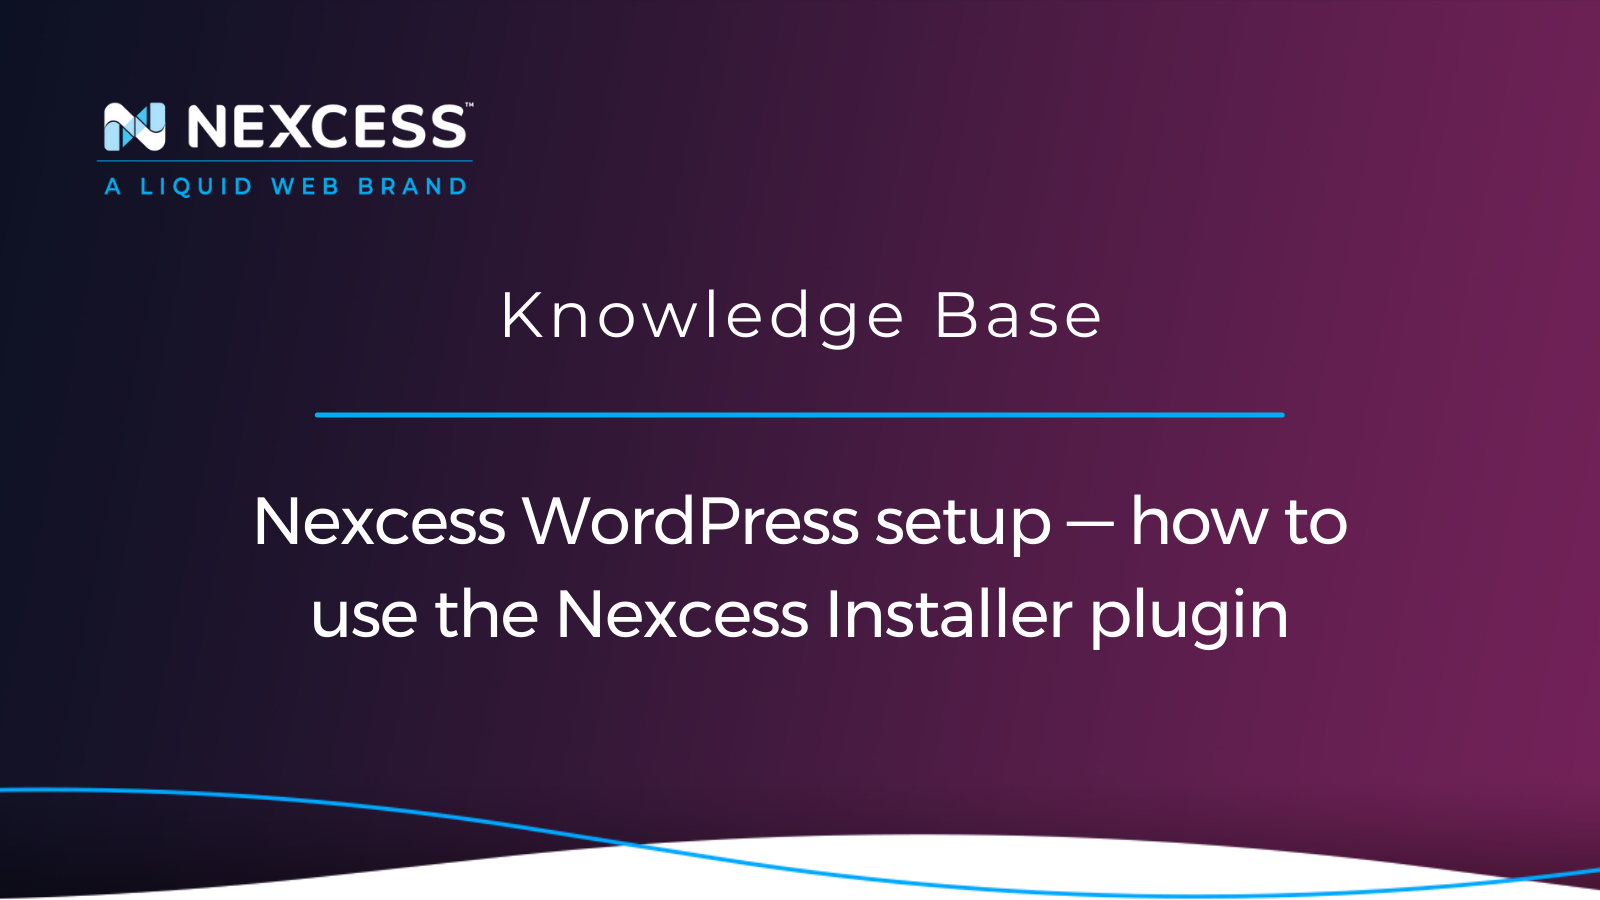 Nexcess WordPress setup — how to use the Nexcess Installer plugin